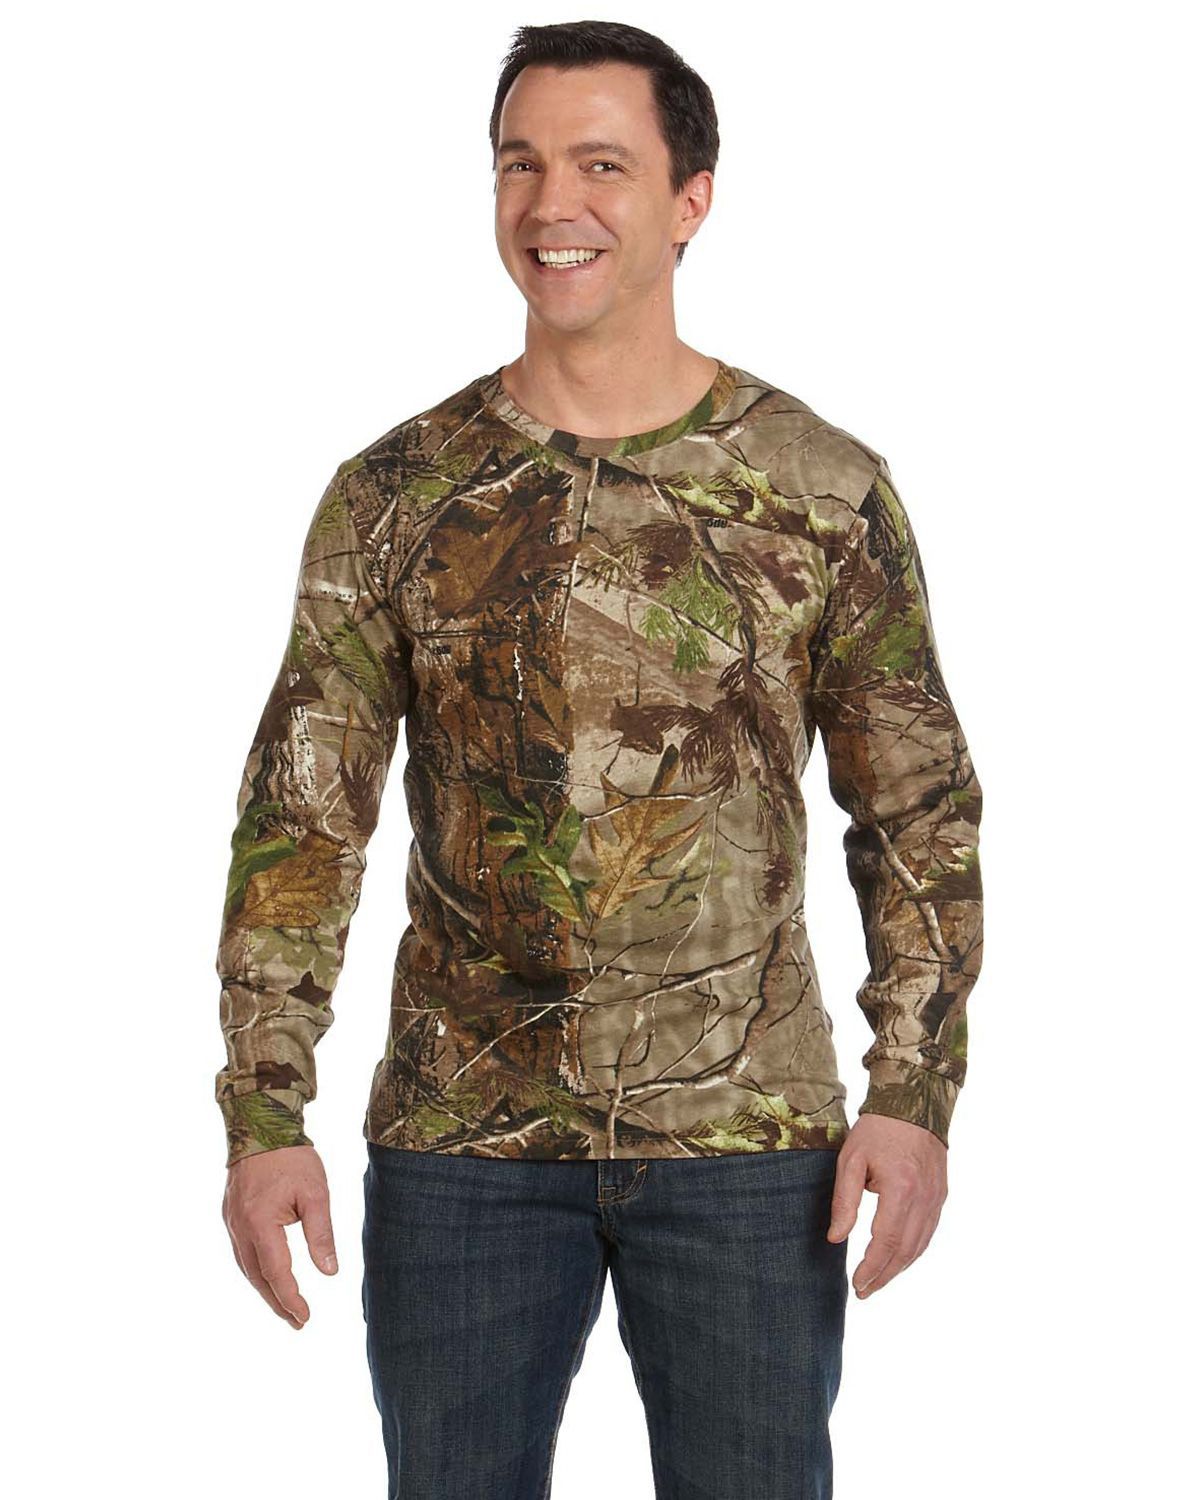 Realtree fishing shirt, hoodie, sweater and v-neck t-shirt